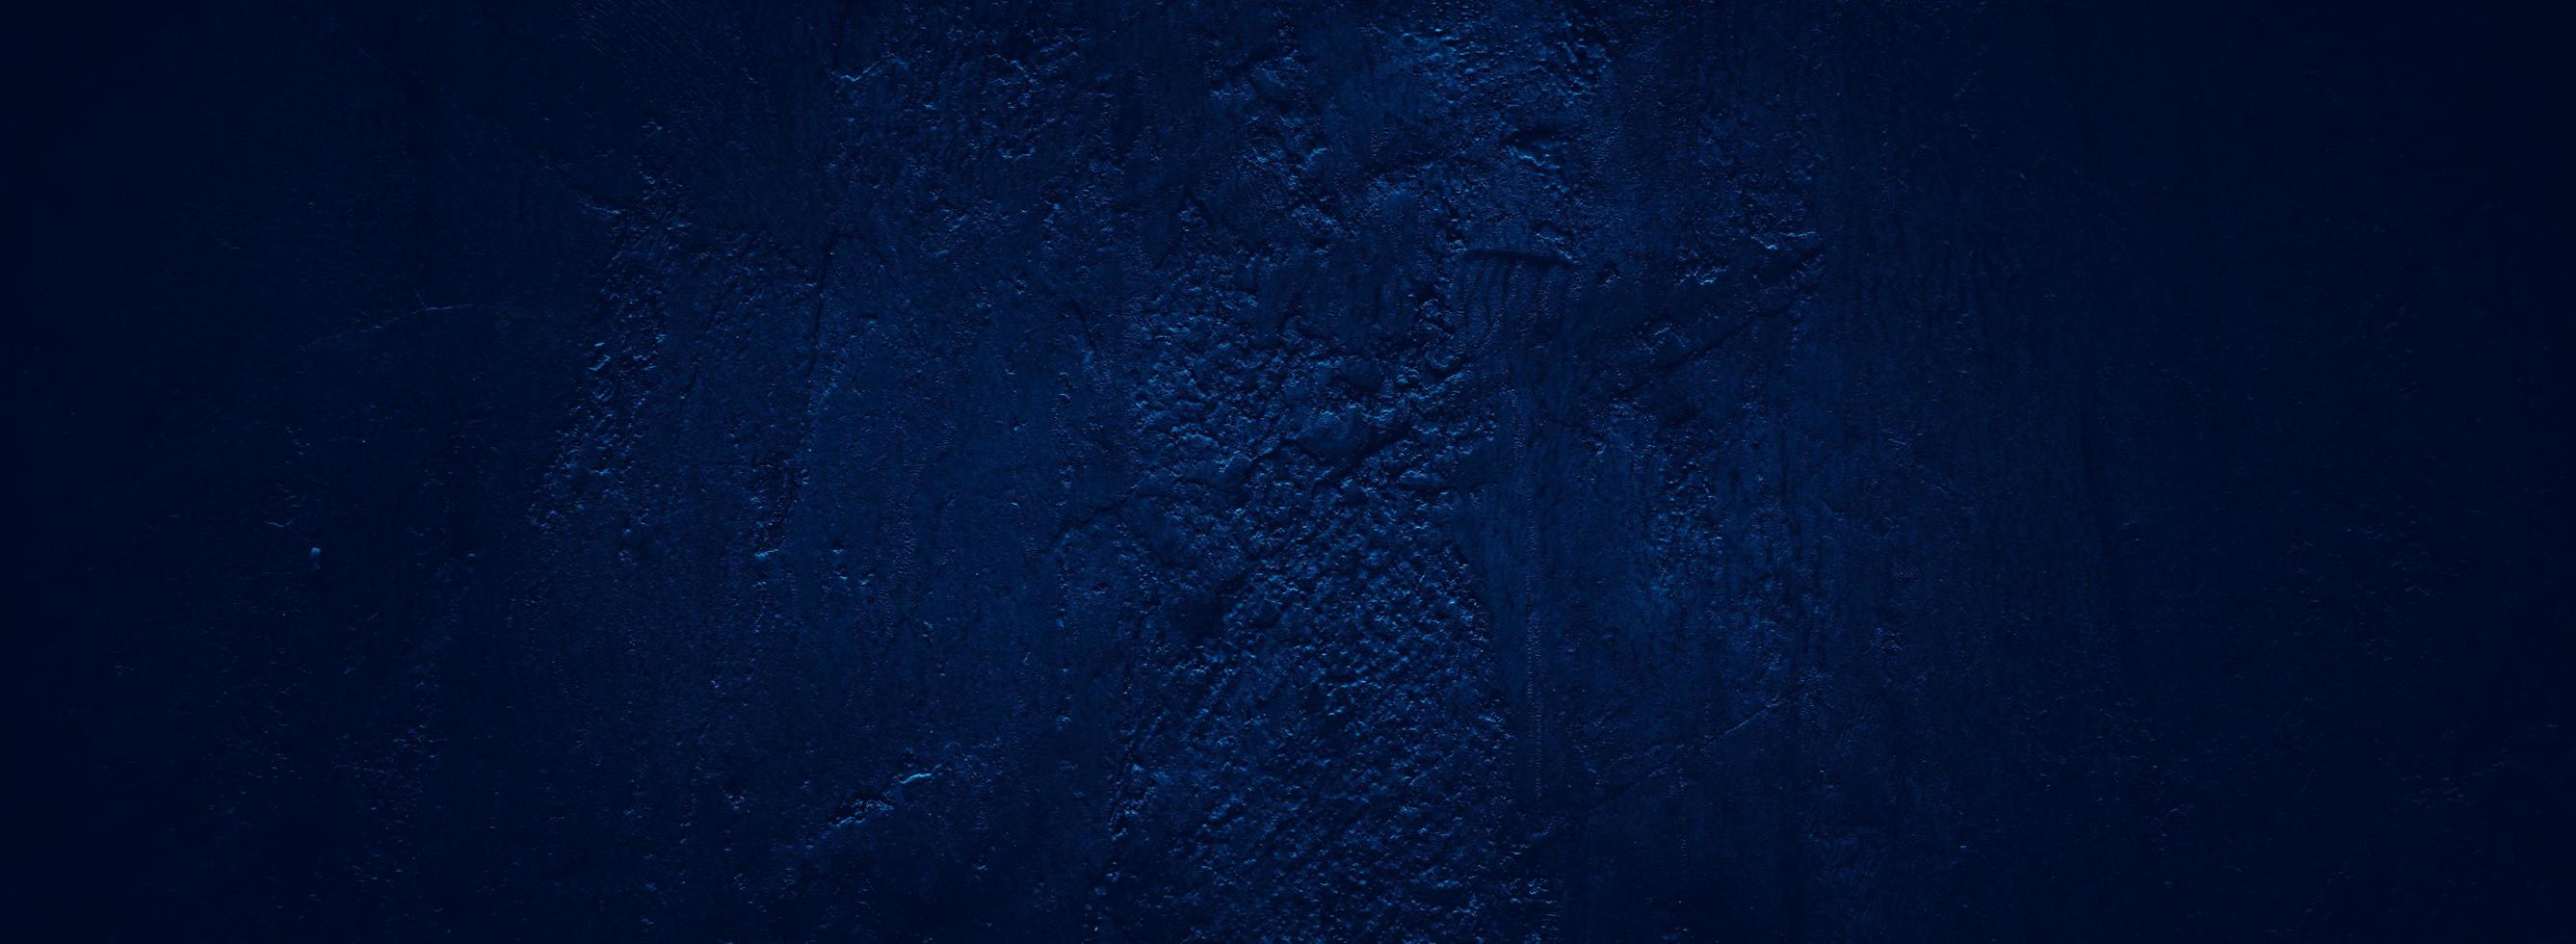 astratto buio grunge blu parete struttura sfondo foto